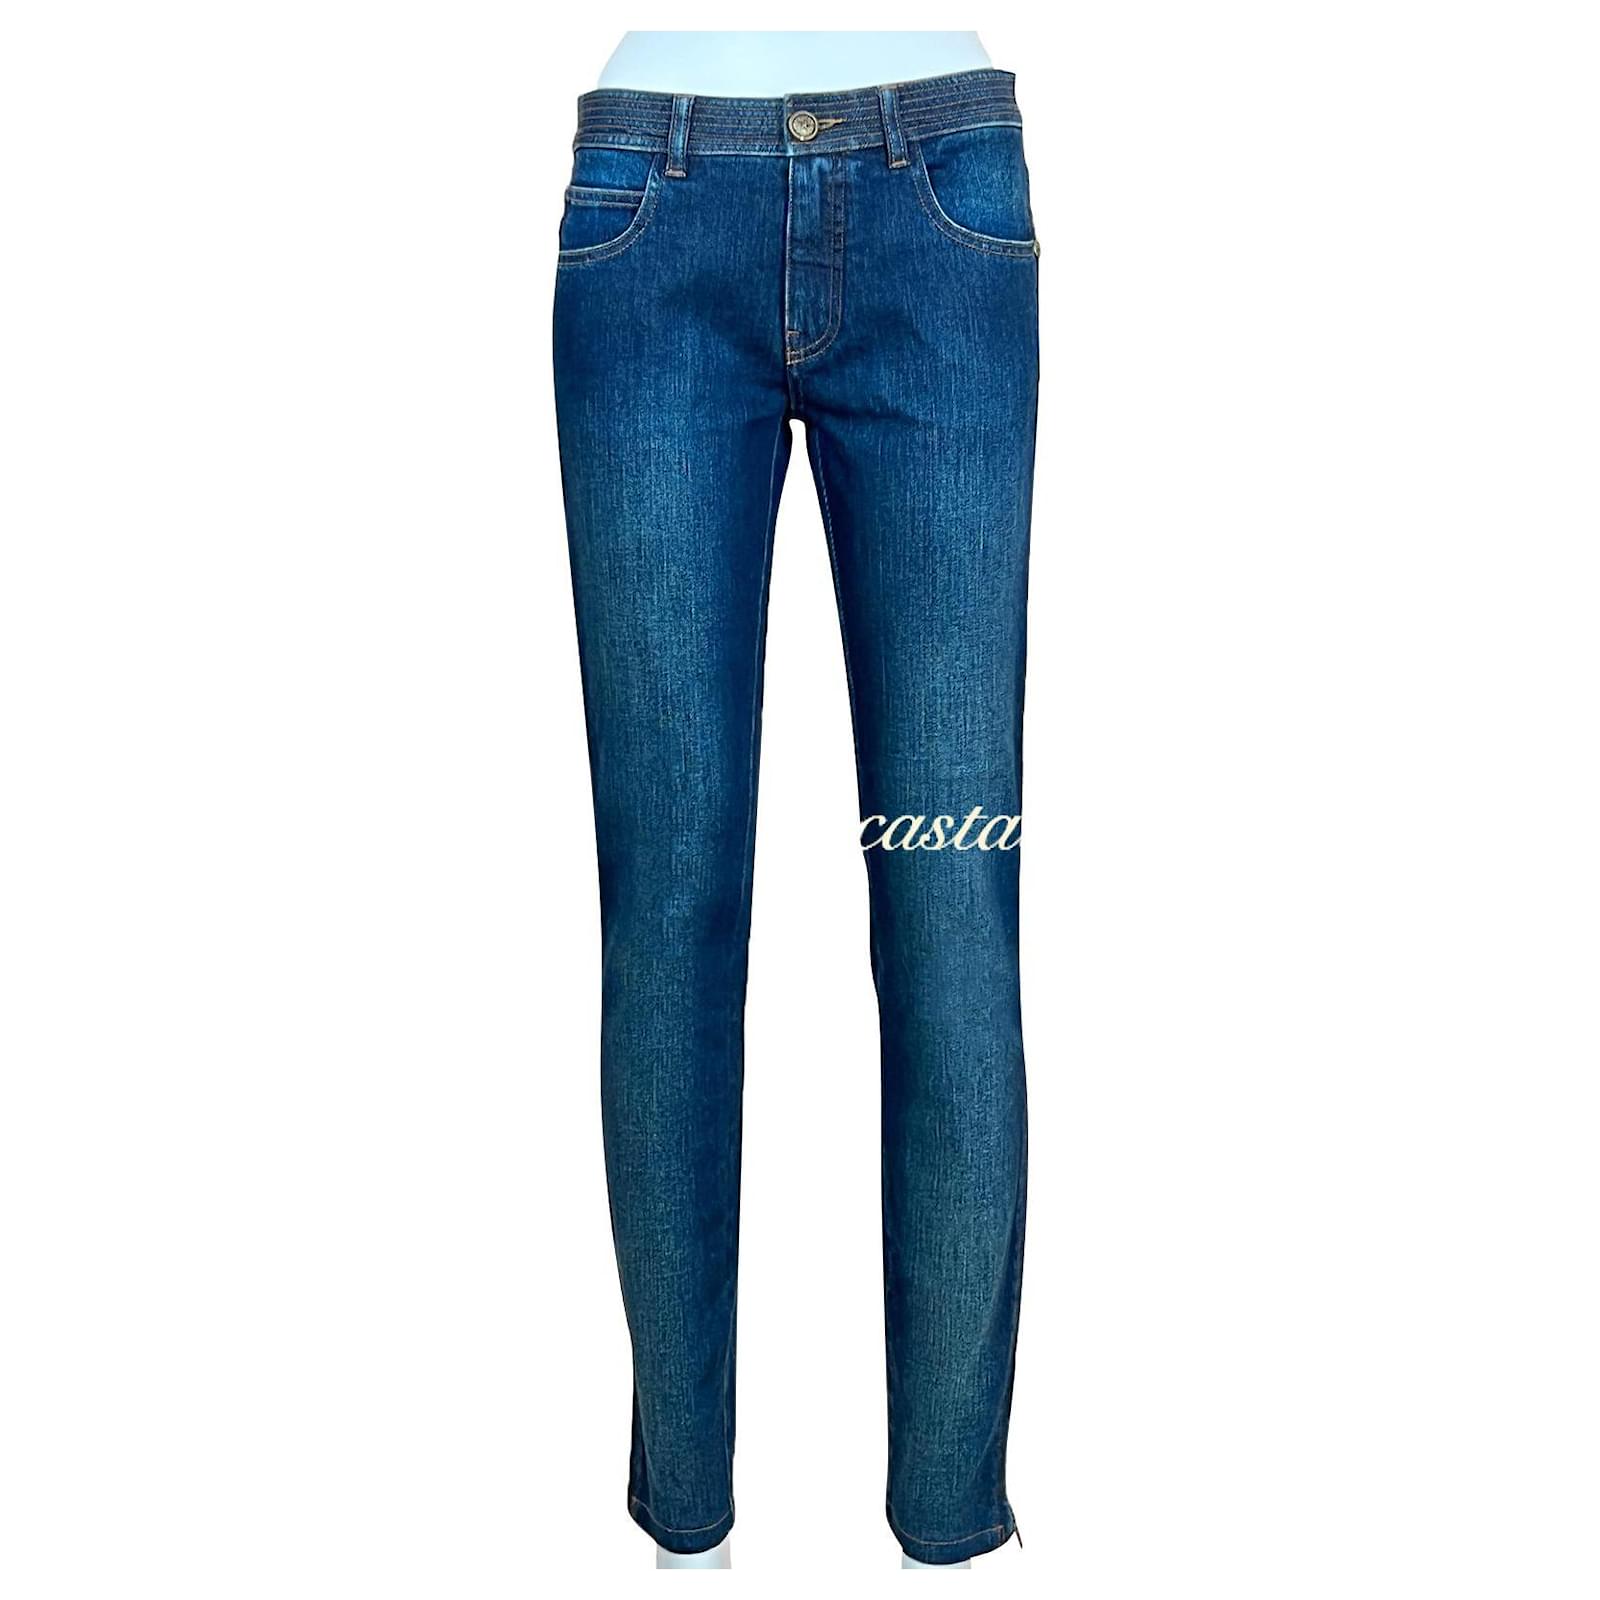 Chanel 2022 Skinny Leg Jeans - Black, 9 Rise Jeans, Clothing - CHA957984